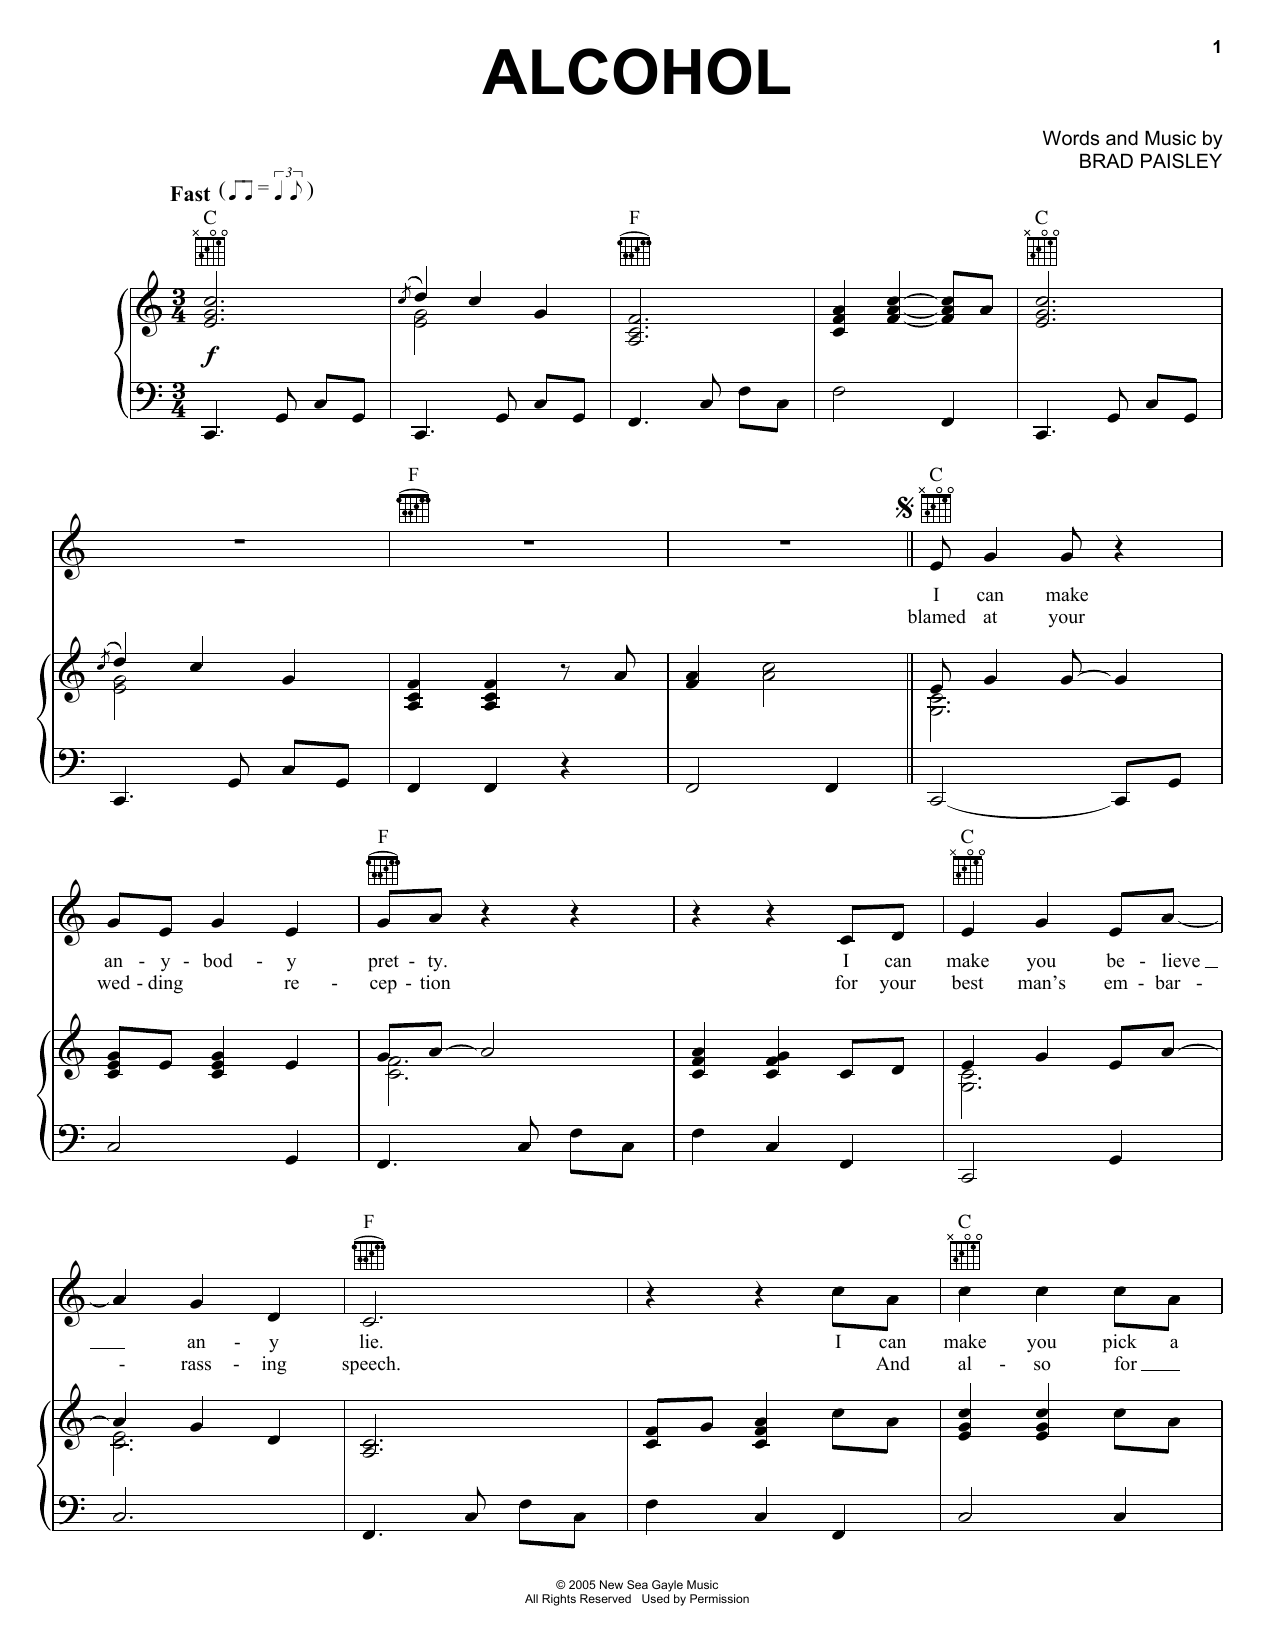 Brad Paisley Alcohol Sheet Music Notes & Chords for Guitar Tab Play-Along - Download or Print PDF